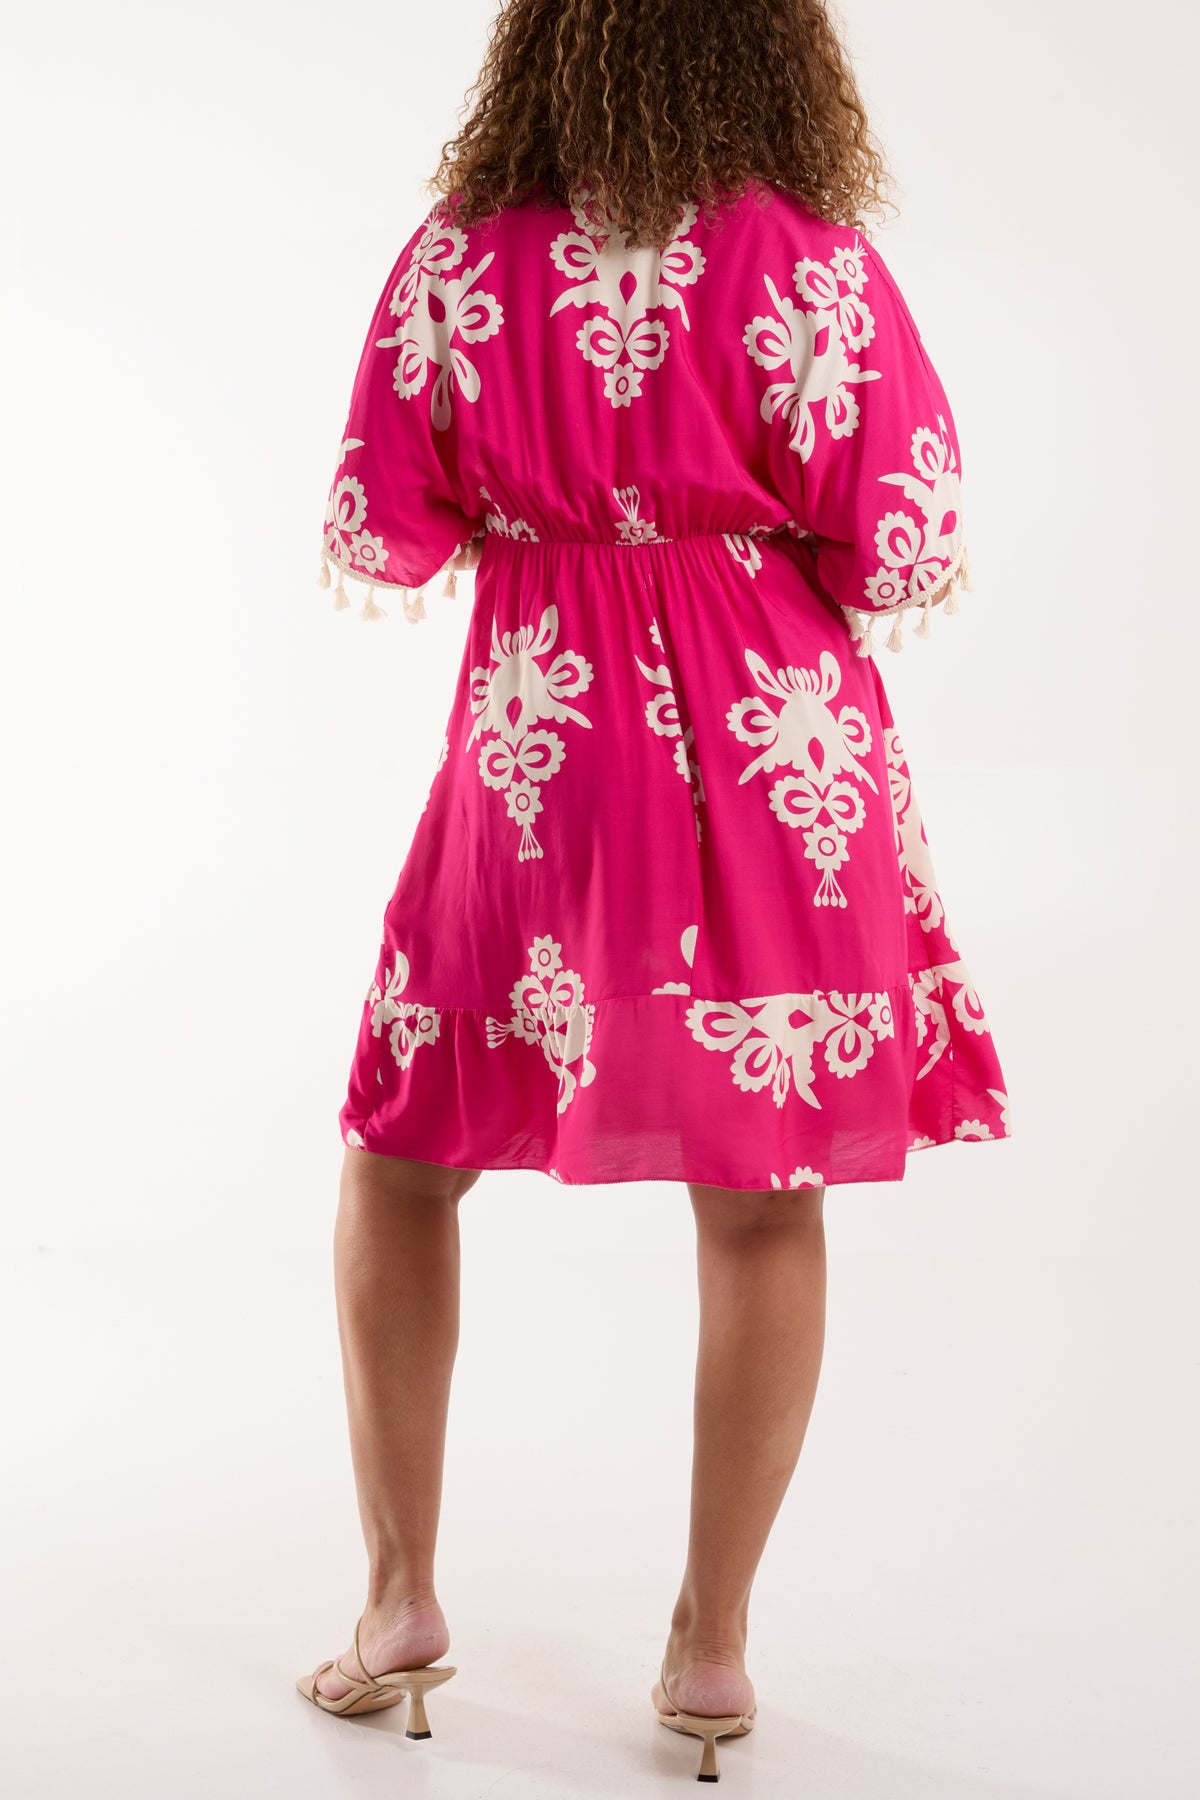 Embellished Neckline Tassels Mini Dress